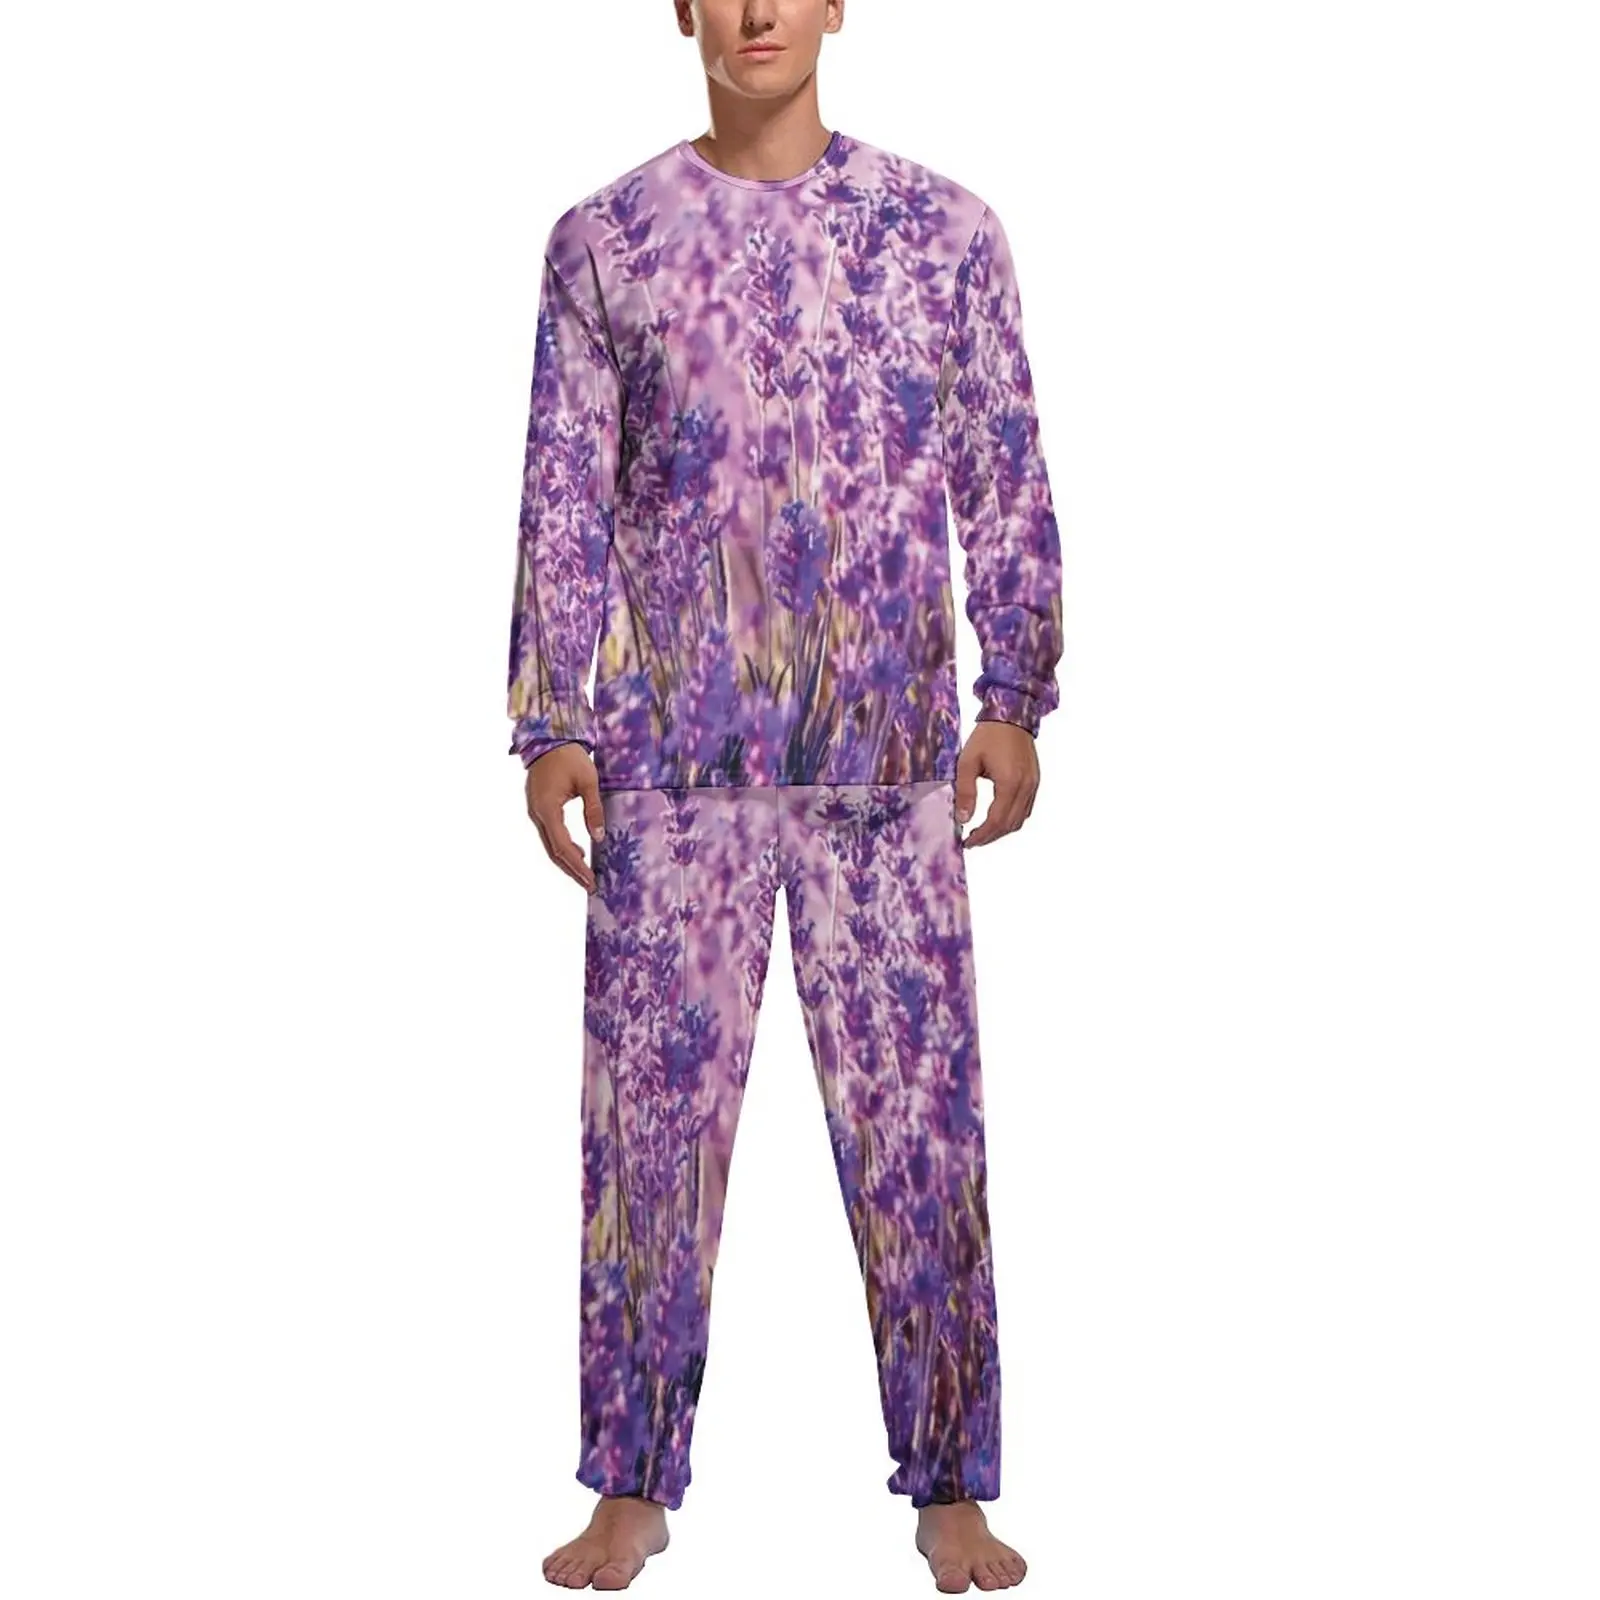 Lavender Pajamas Purple Flowers Print Mens Long Sleeves Cute Pajama Sets 2 Piece Casual Autumn Graphic Sleepwear Gift